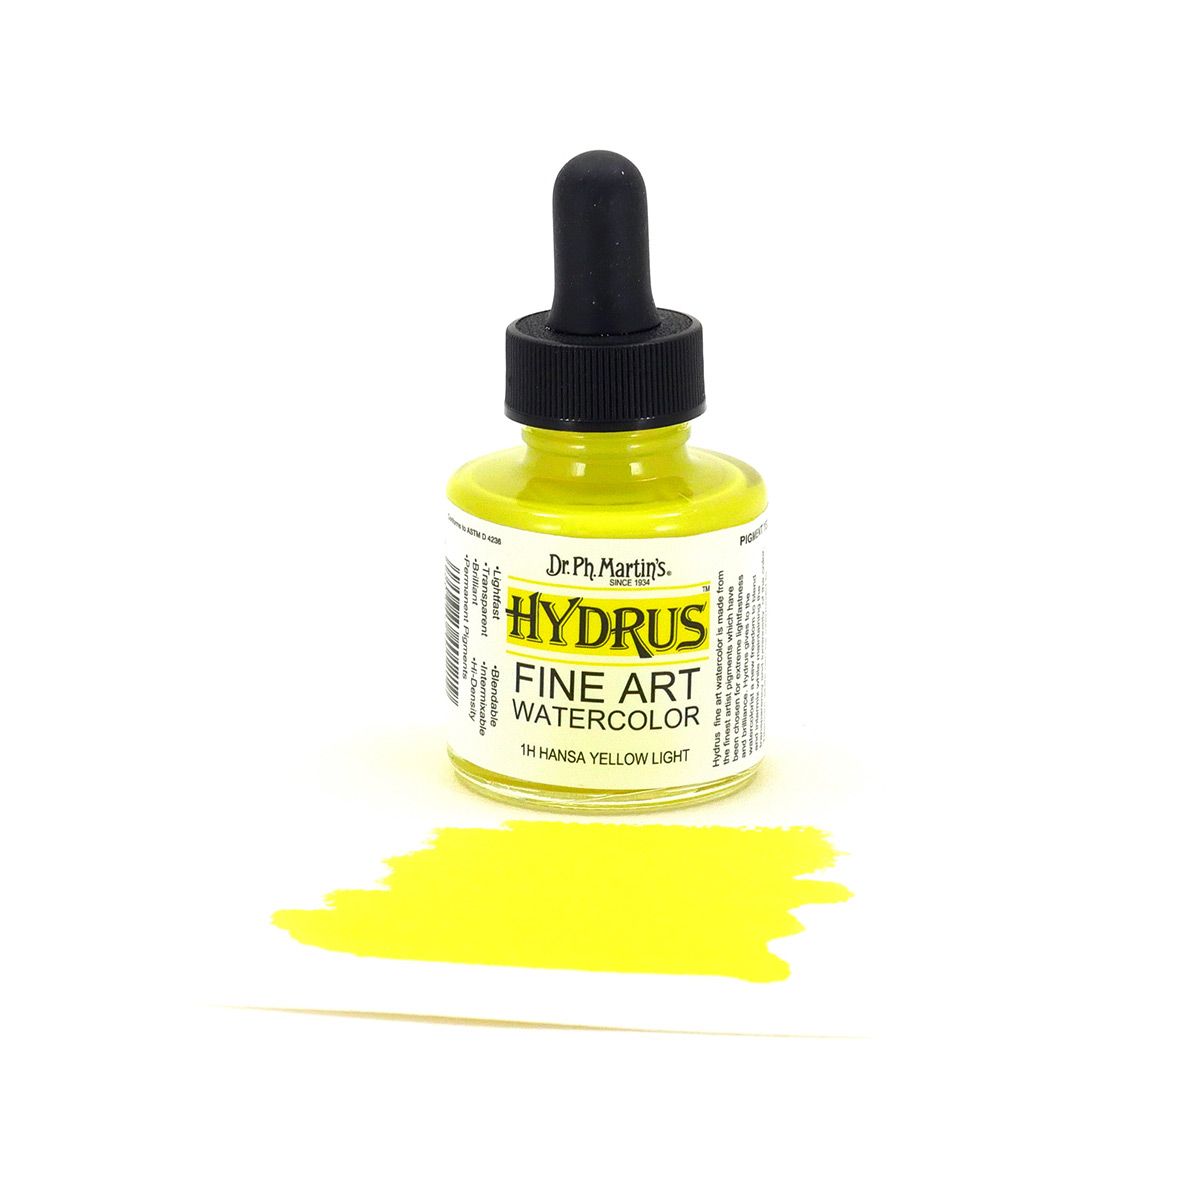 Hydrus Watercolor 1 oz Bottle - Hansa Yellow Light